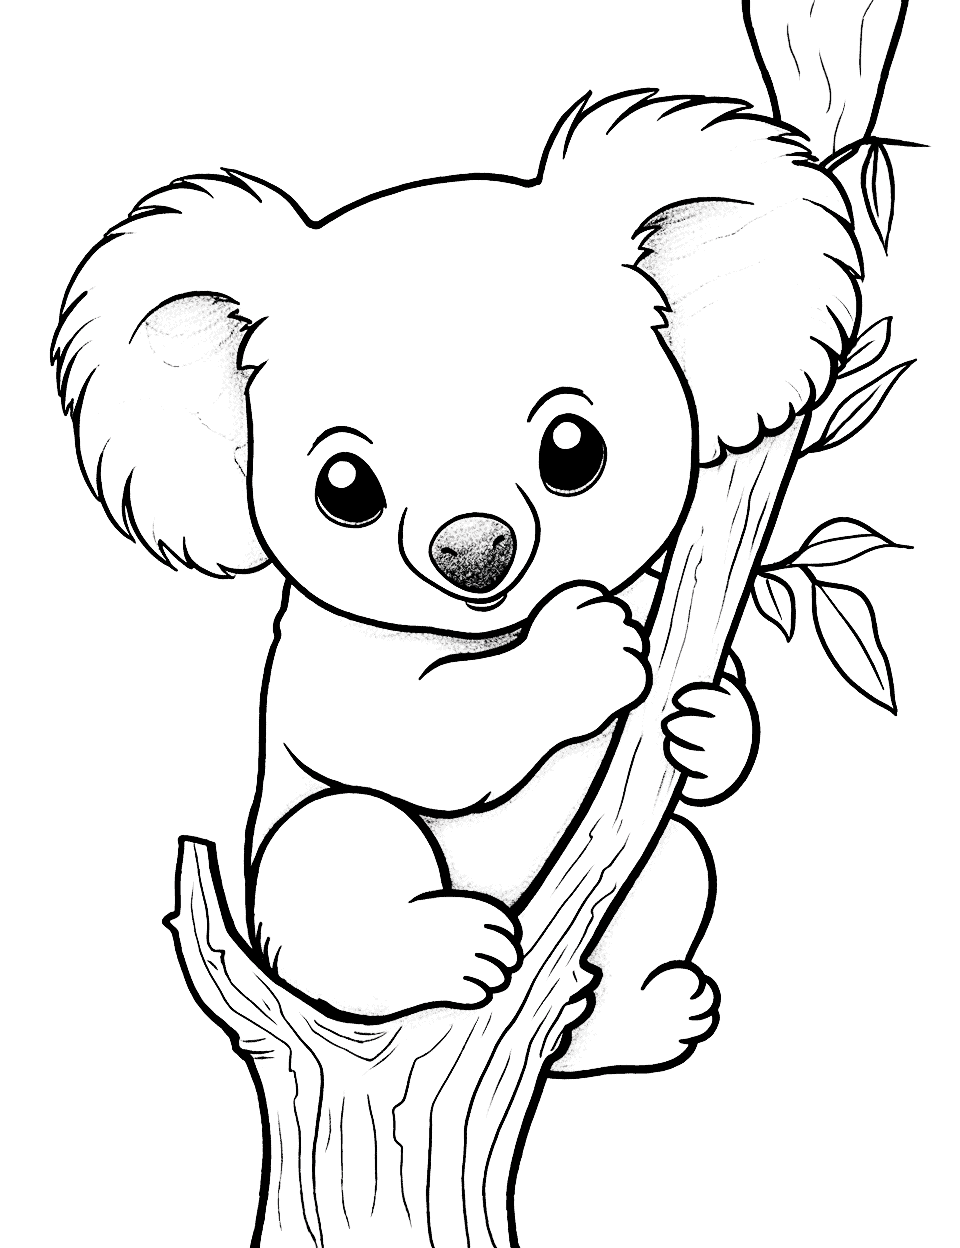 Climbing Koala Animal Coloring Page - A koala climbing up a eucalyptus tree with a curious expression.